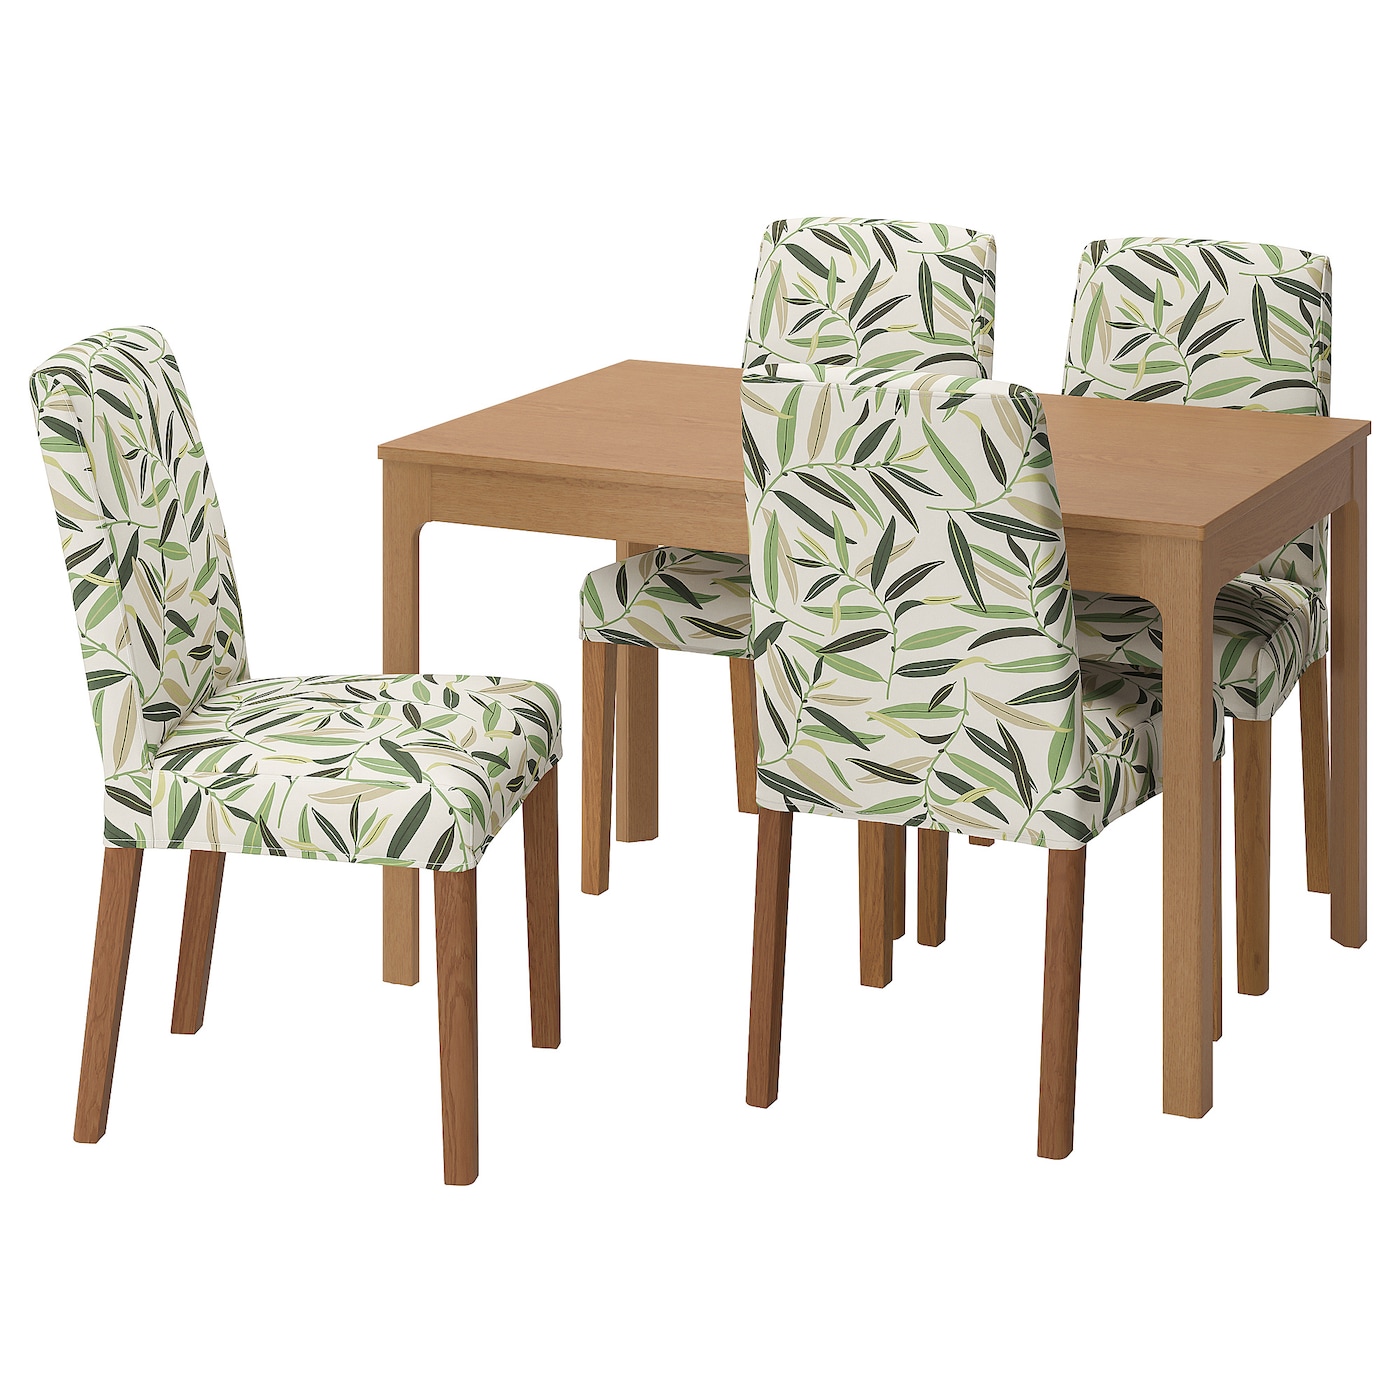 Стол и 4 стула - EKEDALEN / BERGMUND IKEA/ ЭКАДАЛЕН /БЕРГМУНД ИКЕА, 120/180 см, коричневый/белый с рисунокм